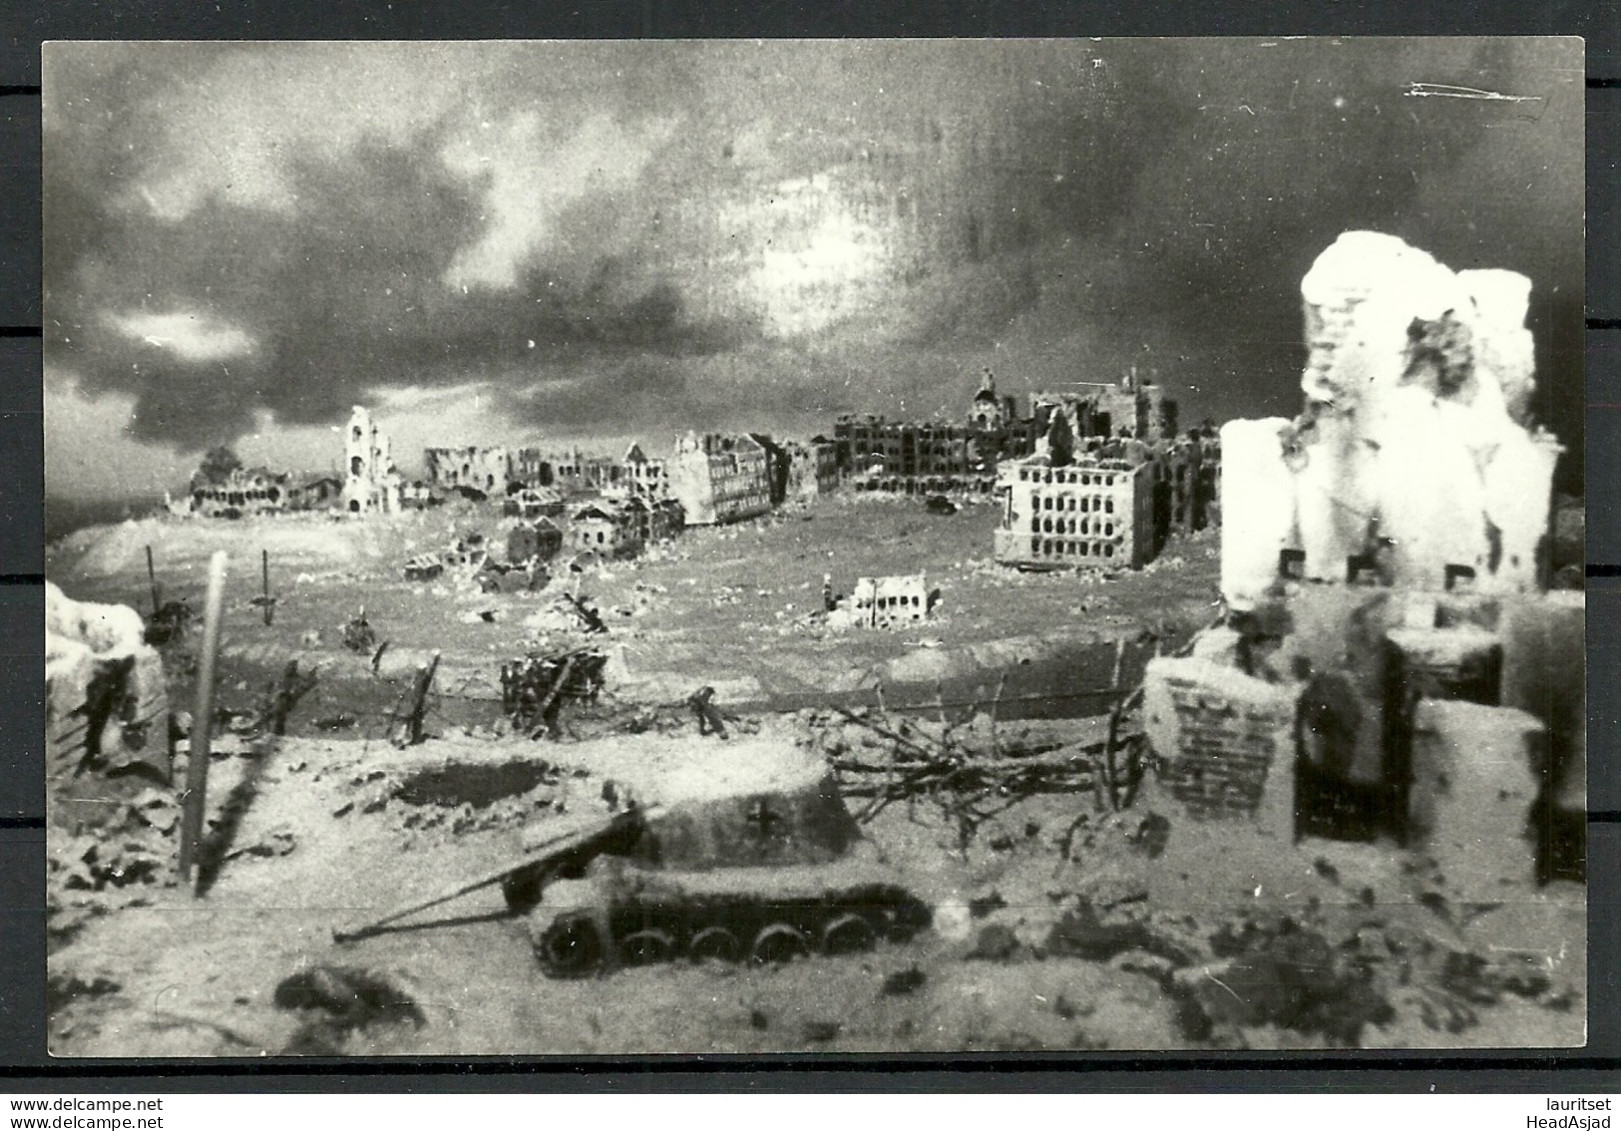 RUSSIA Russland Old Original Photofrapf 1943 WW II Volgograd ? Nach Der Schlacht The City After The Battle Tanks Etc. - Guerra, Militares